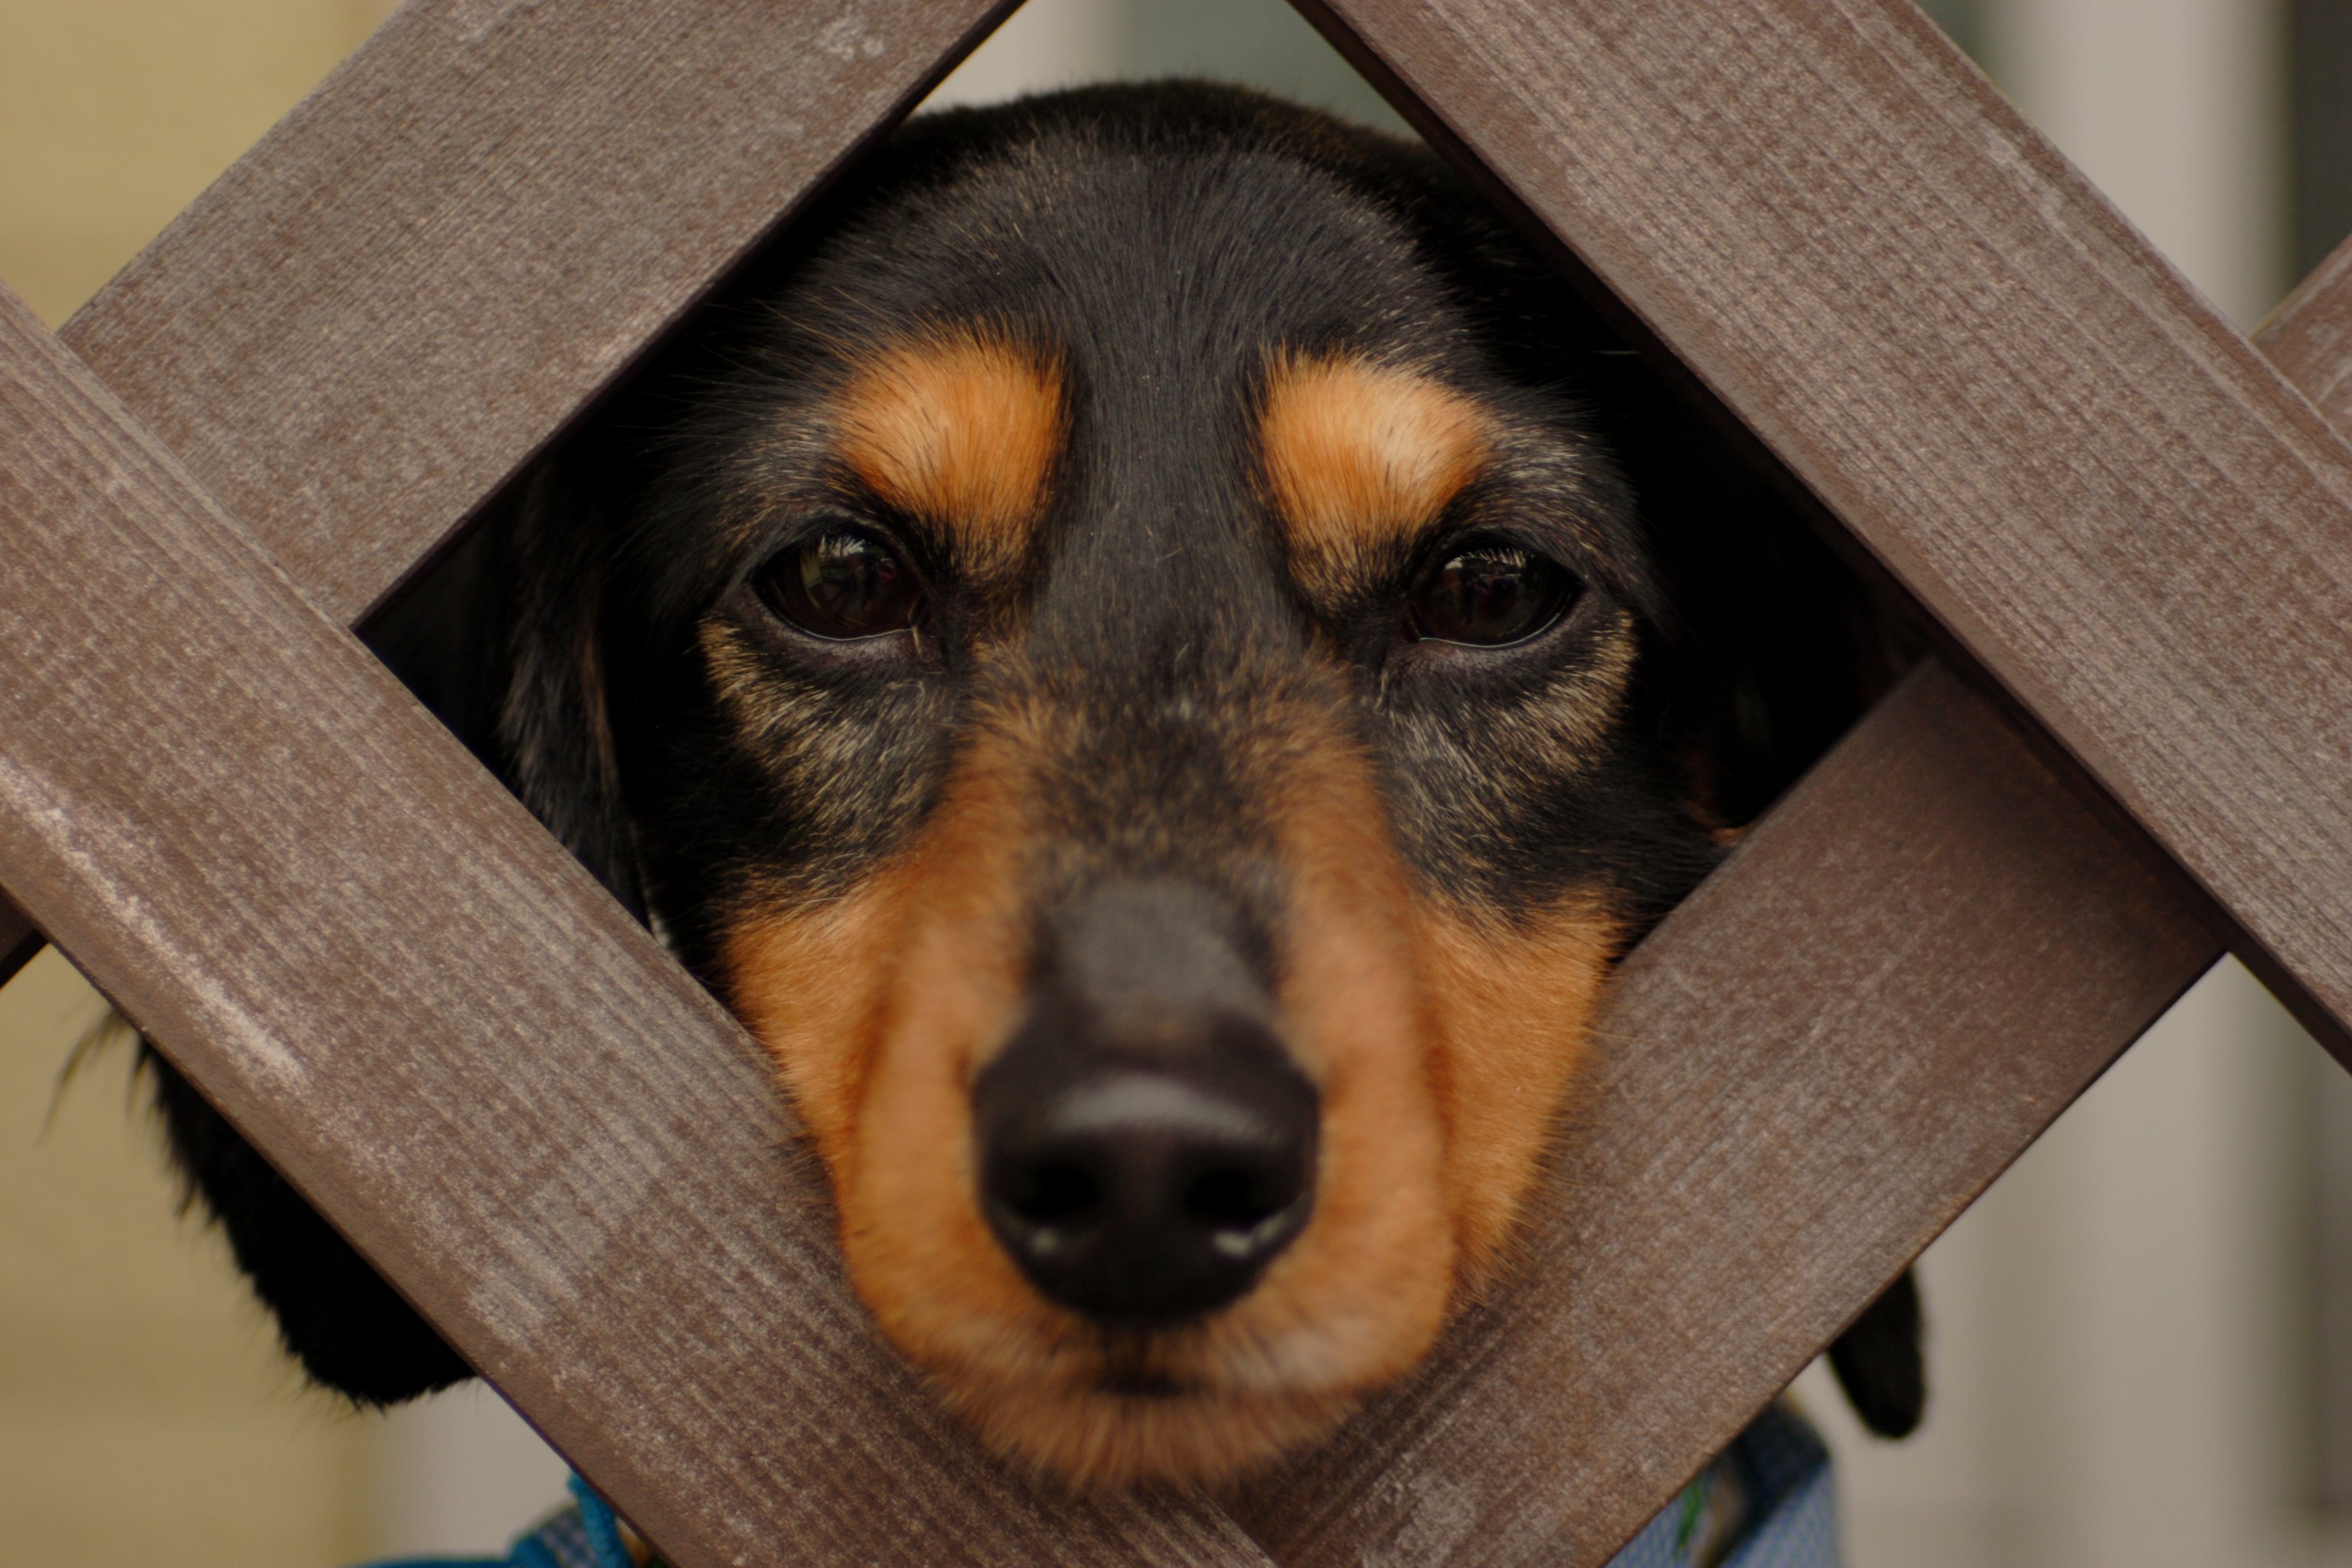 File:Funny dog.jpg - Wikipedia